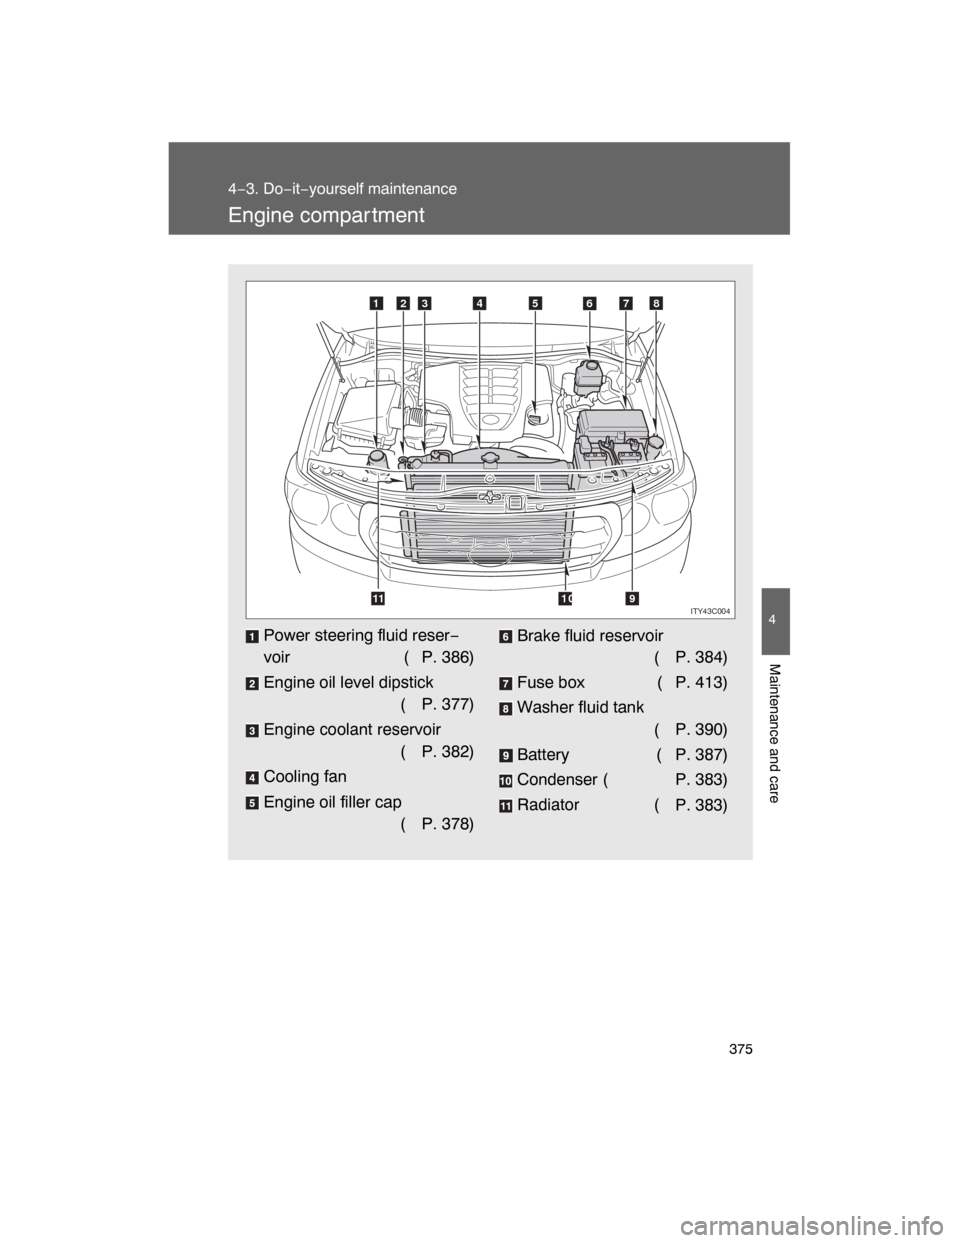 TOYOTA LAND CRUISER 2008 J200 Owners Manual 375
4−3. Do−it−yourself maintenance
4
Maintenance and care
Engine compar tment
Power steering fluid reser−
voir ( P. 386)
Engine oil level dipstick
(P. 377)
Engine coolant reservoir
(P. 382)
C